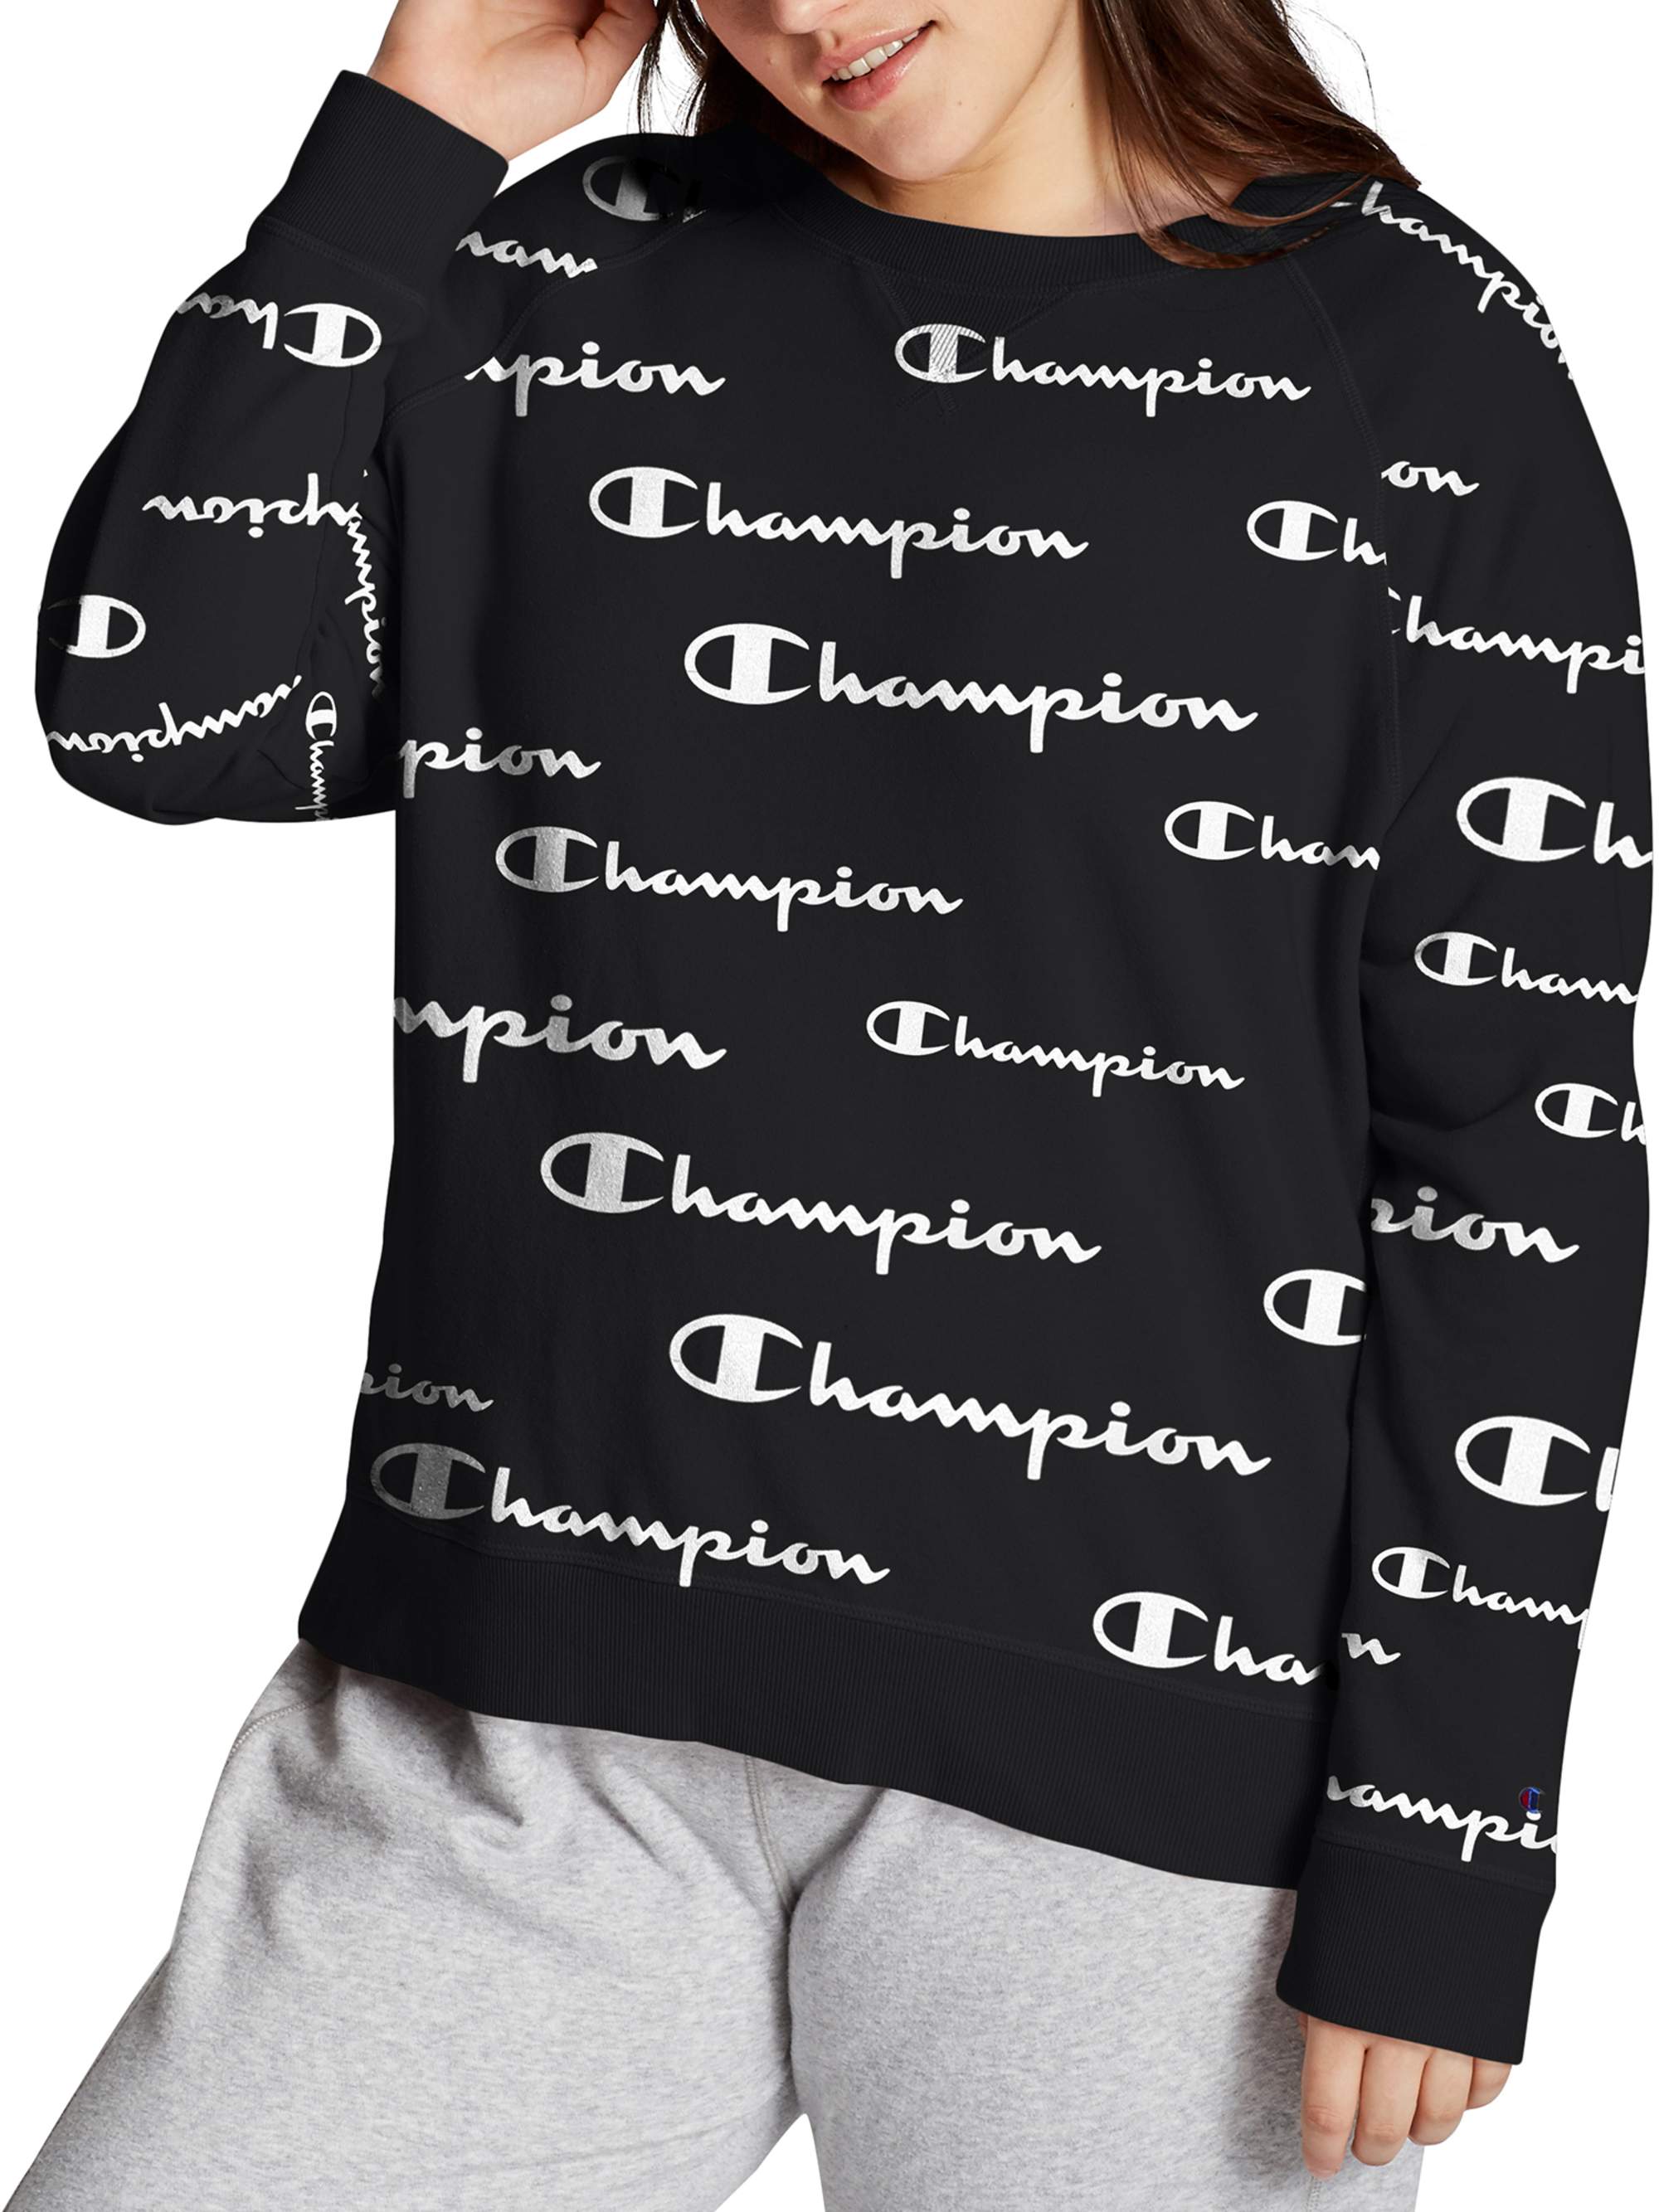 Champion Women's Plus Campus French Terry Crewneck Sweatshirt - image 1 of 5